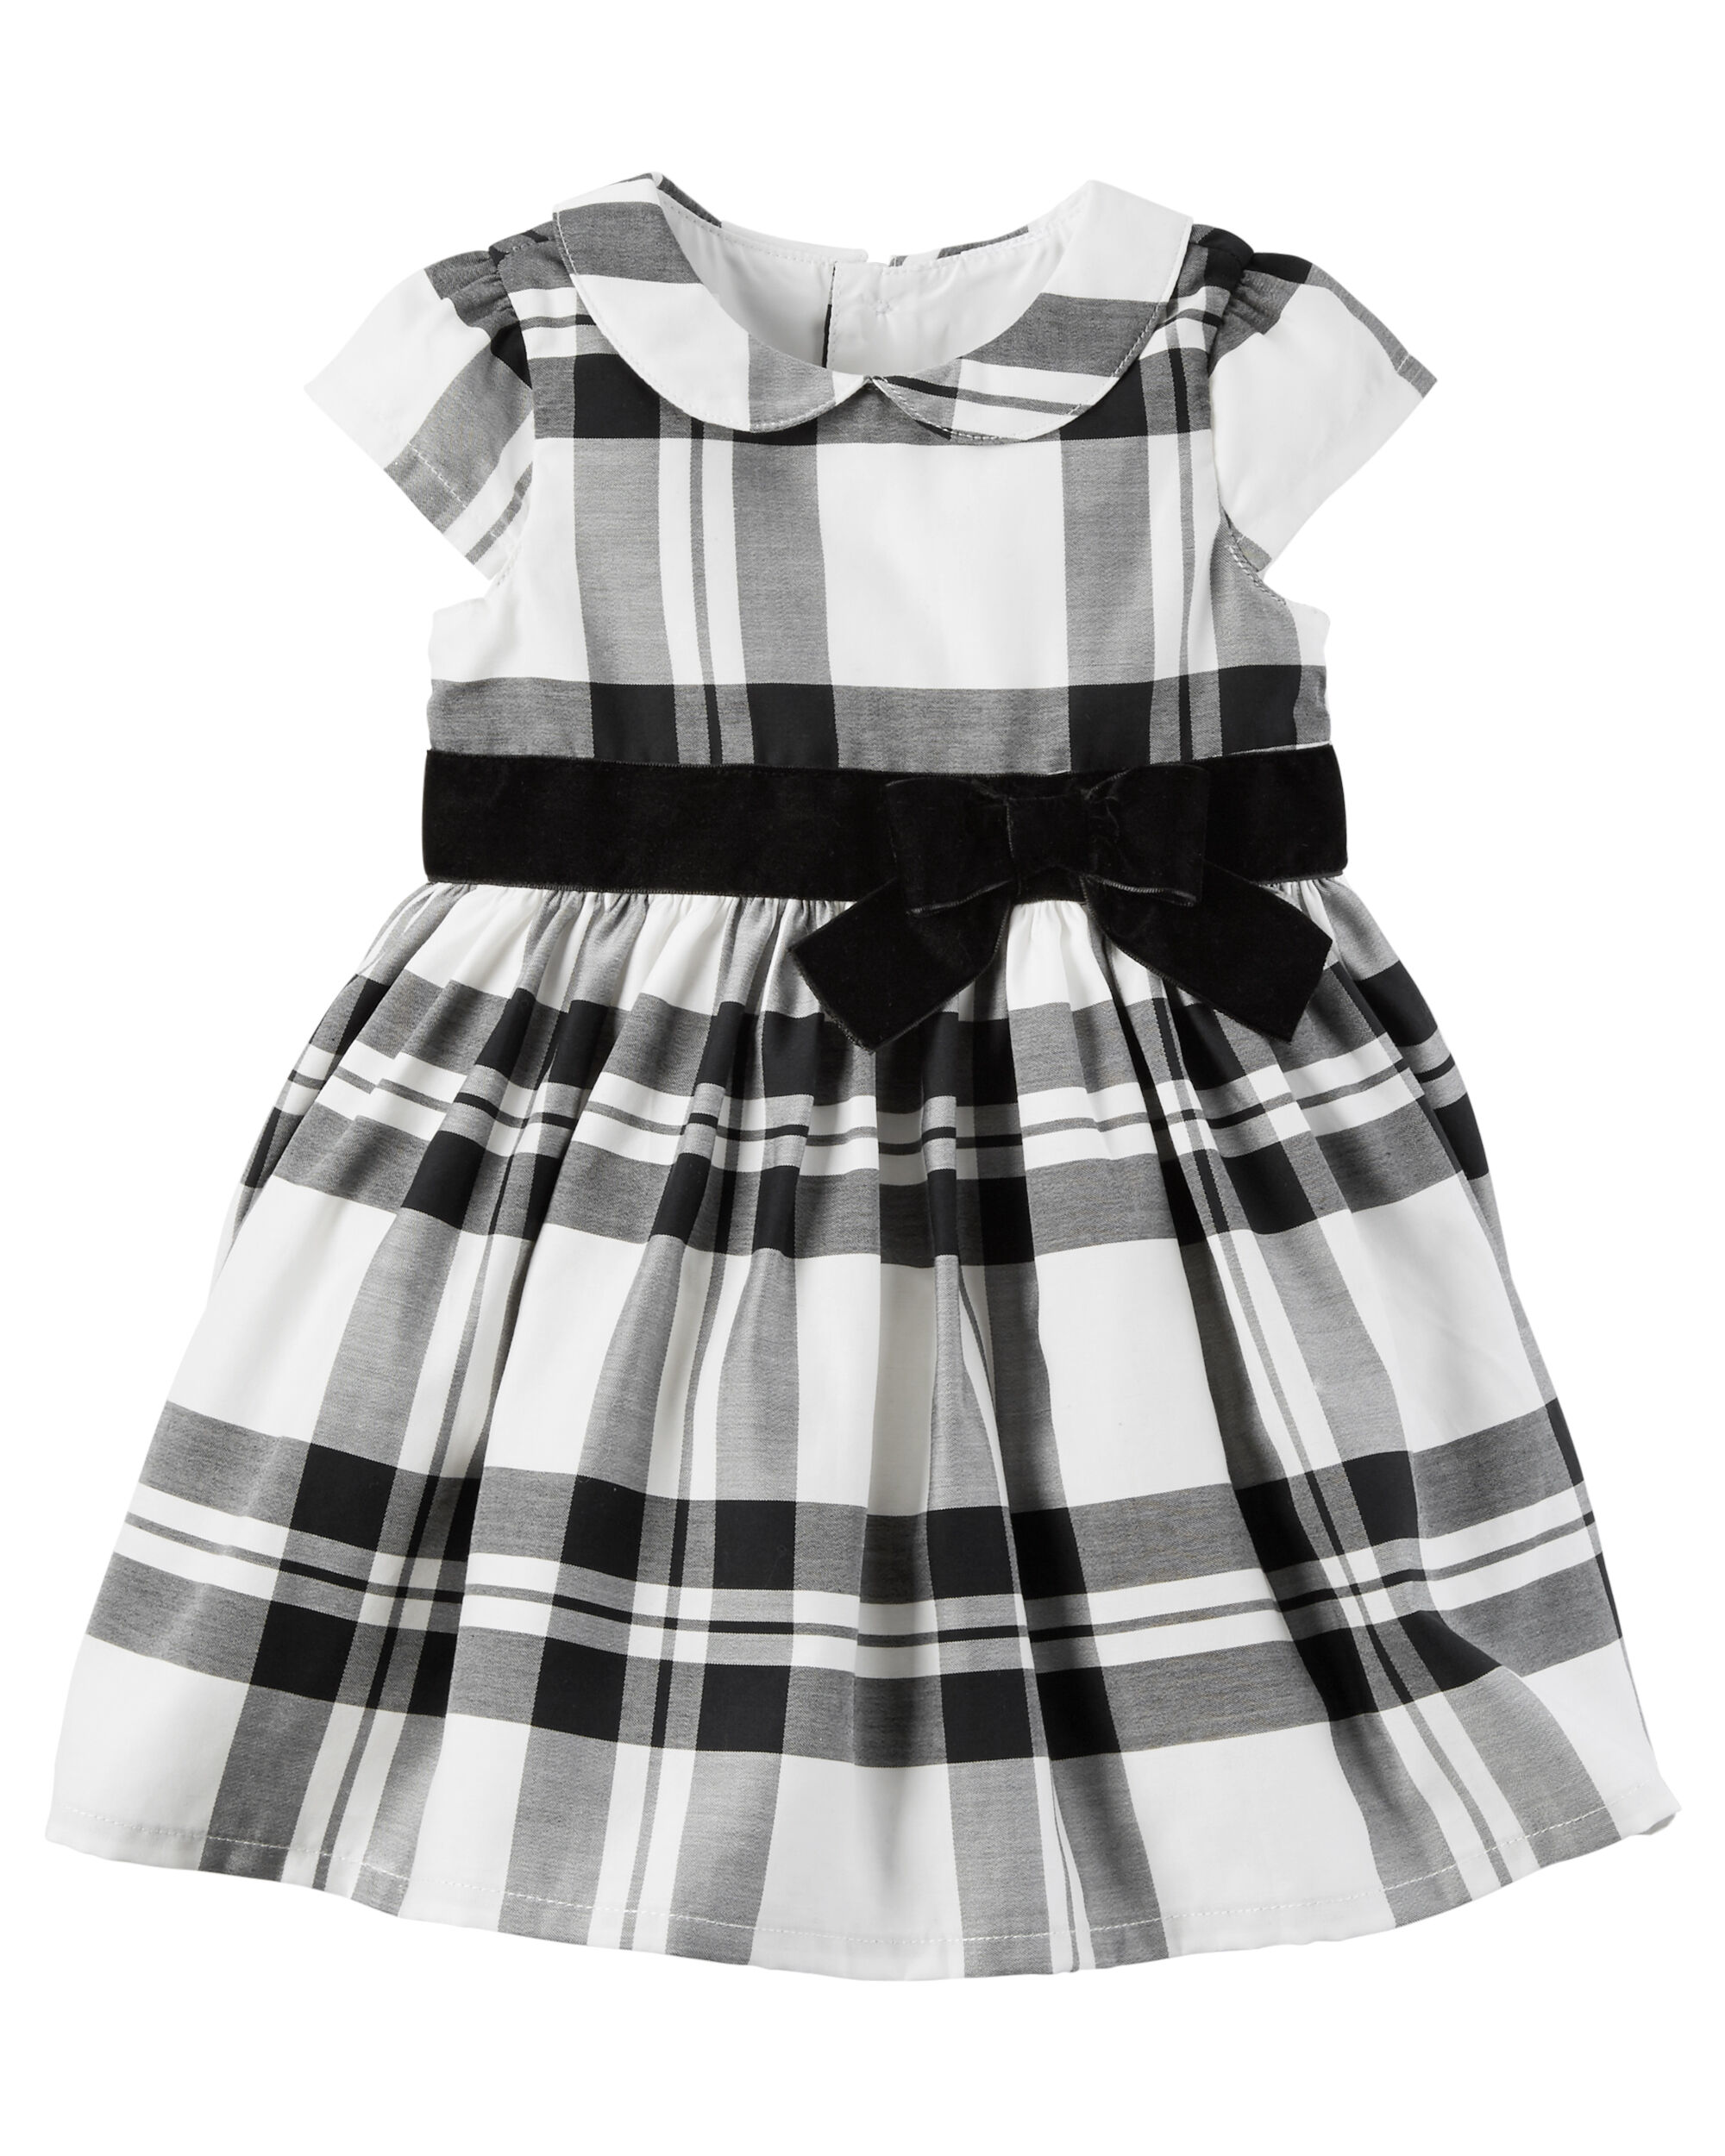 baby girl plaid dress